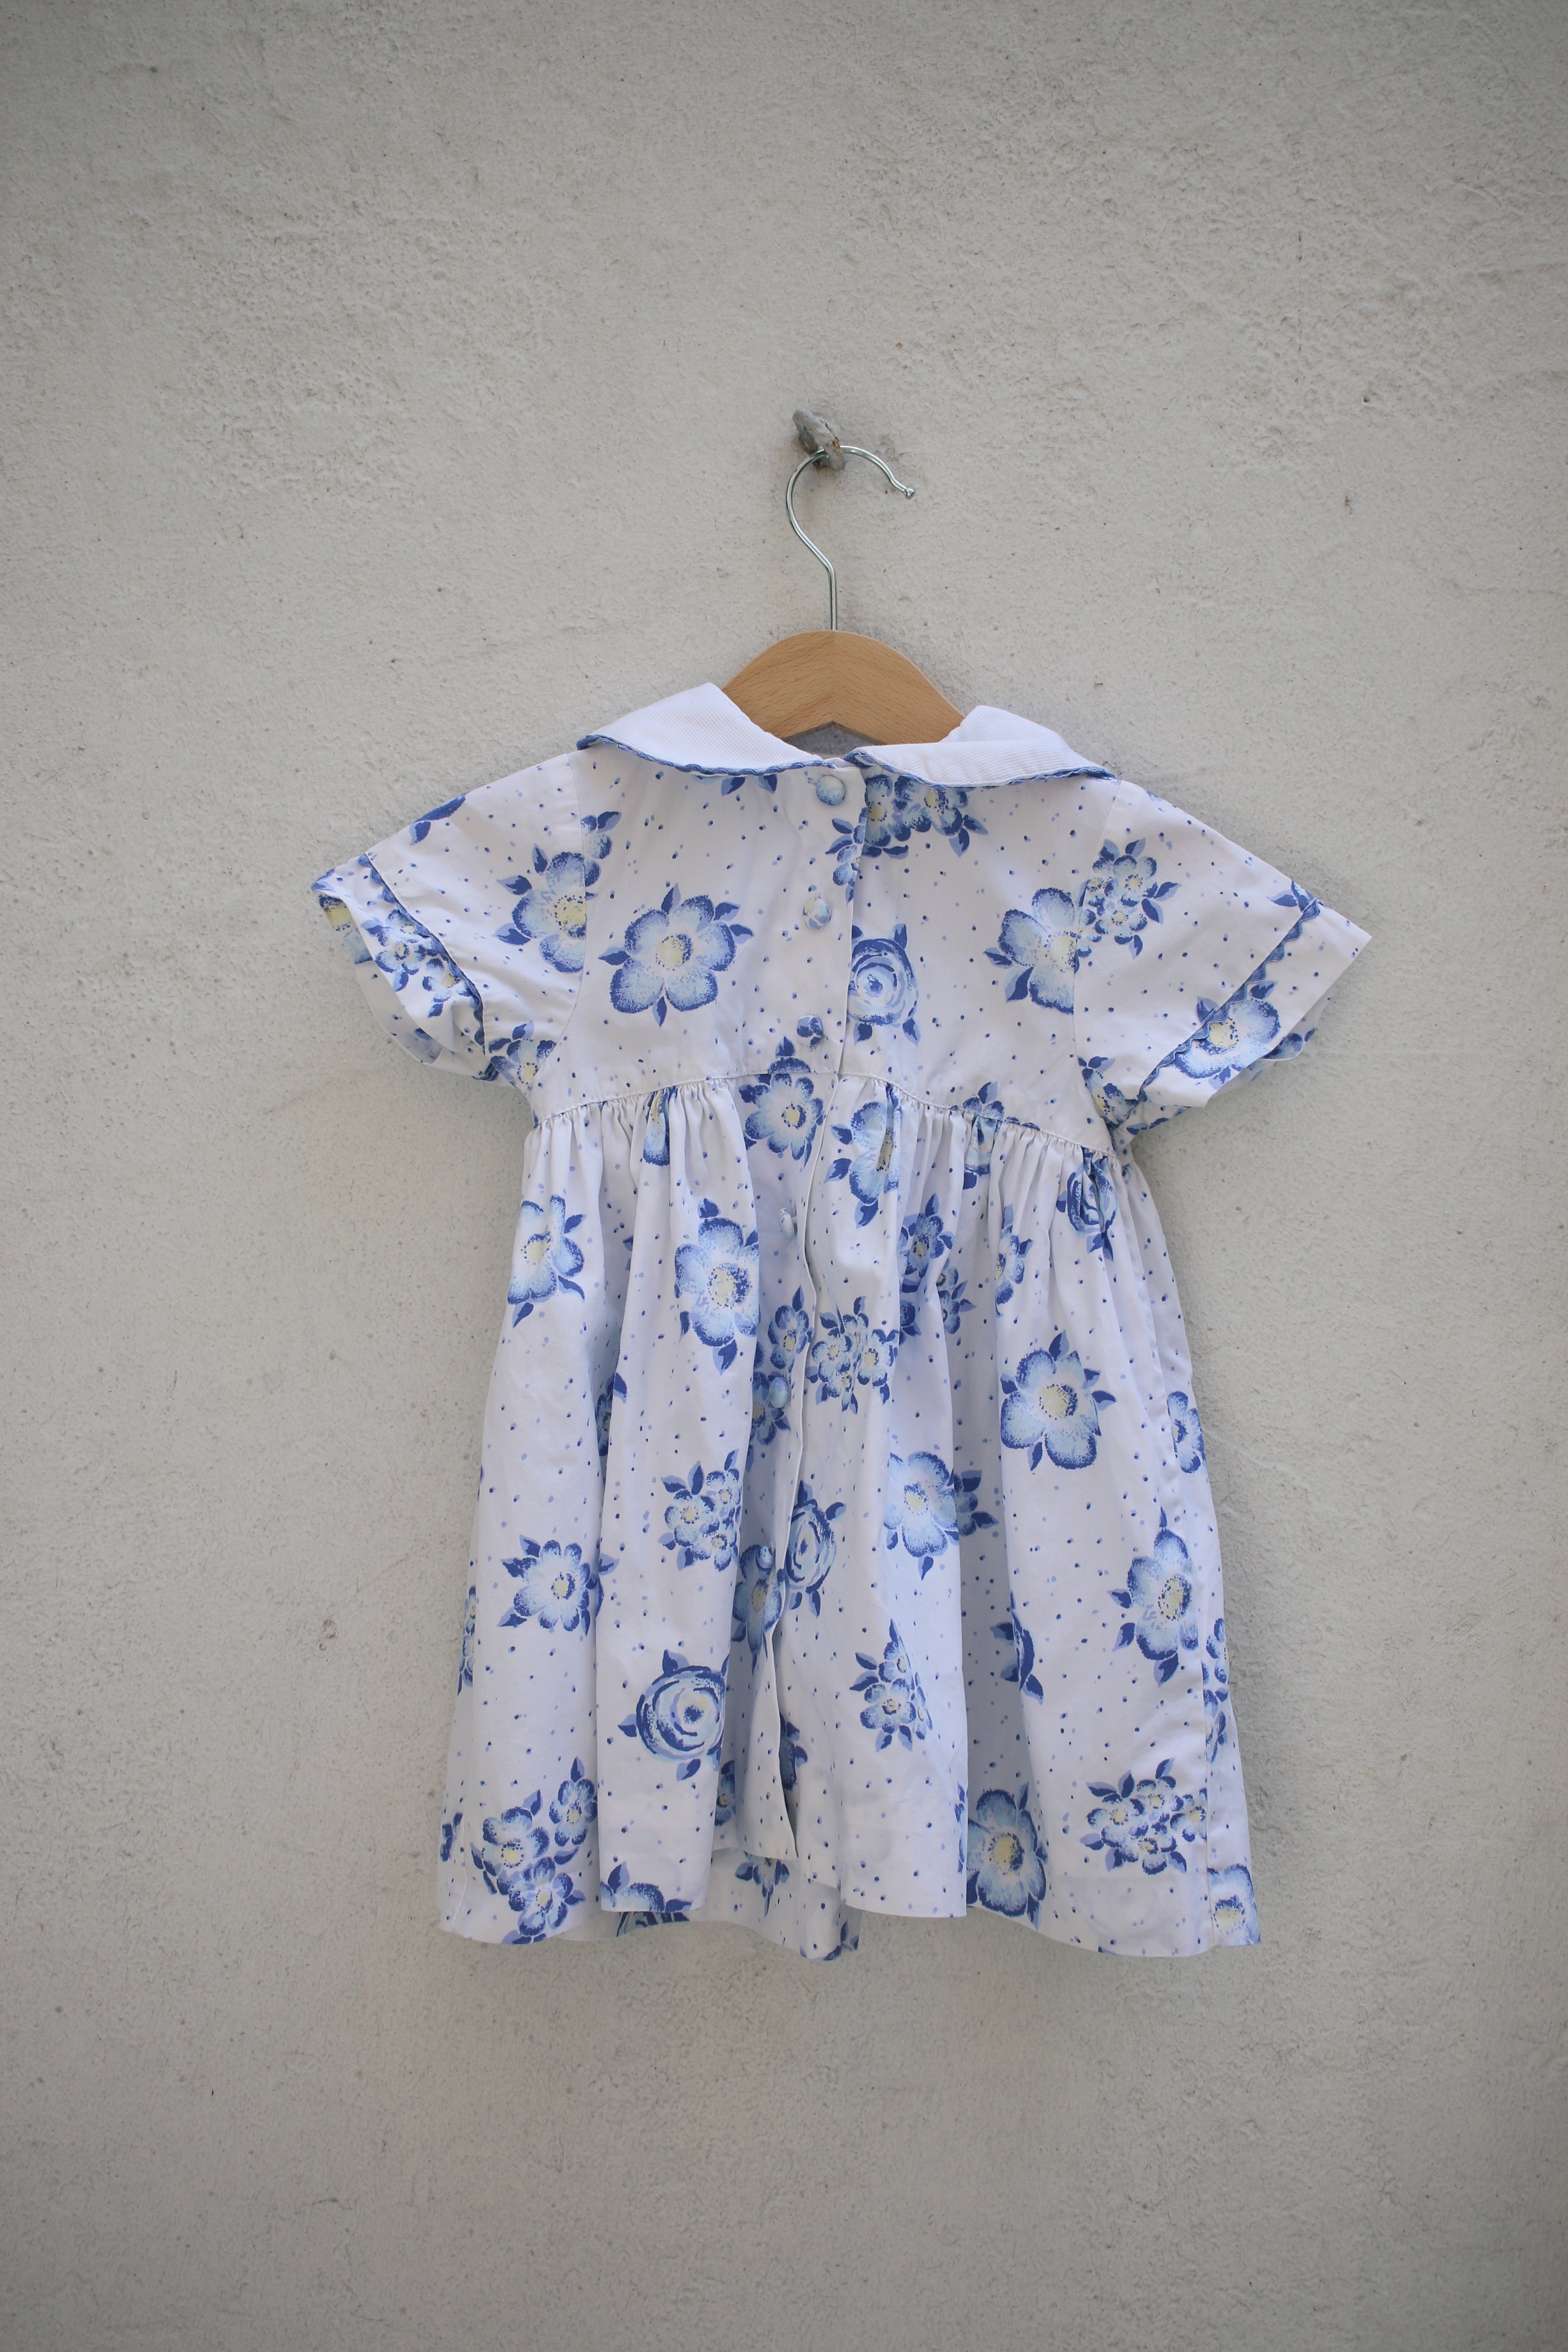 Vintage French blue floral sailor dress - size 12 months